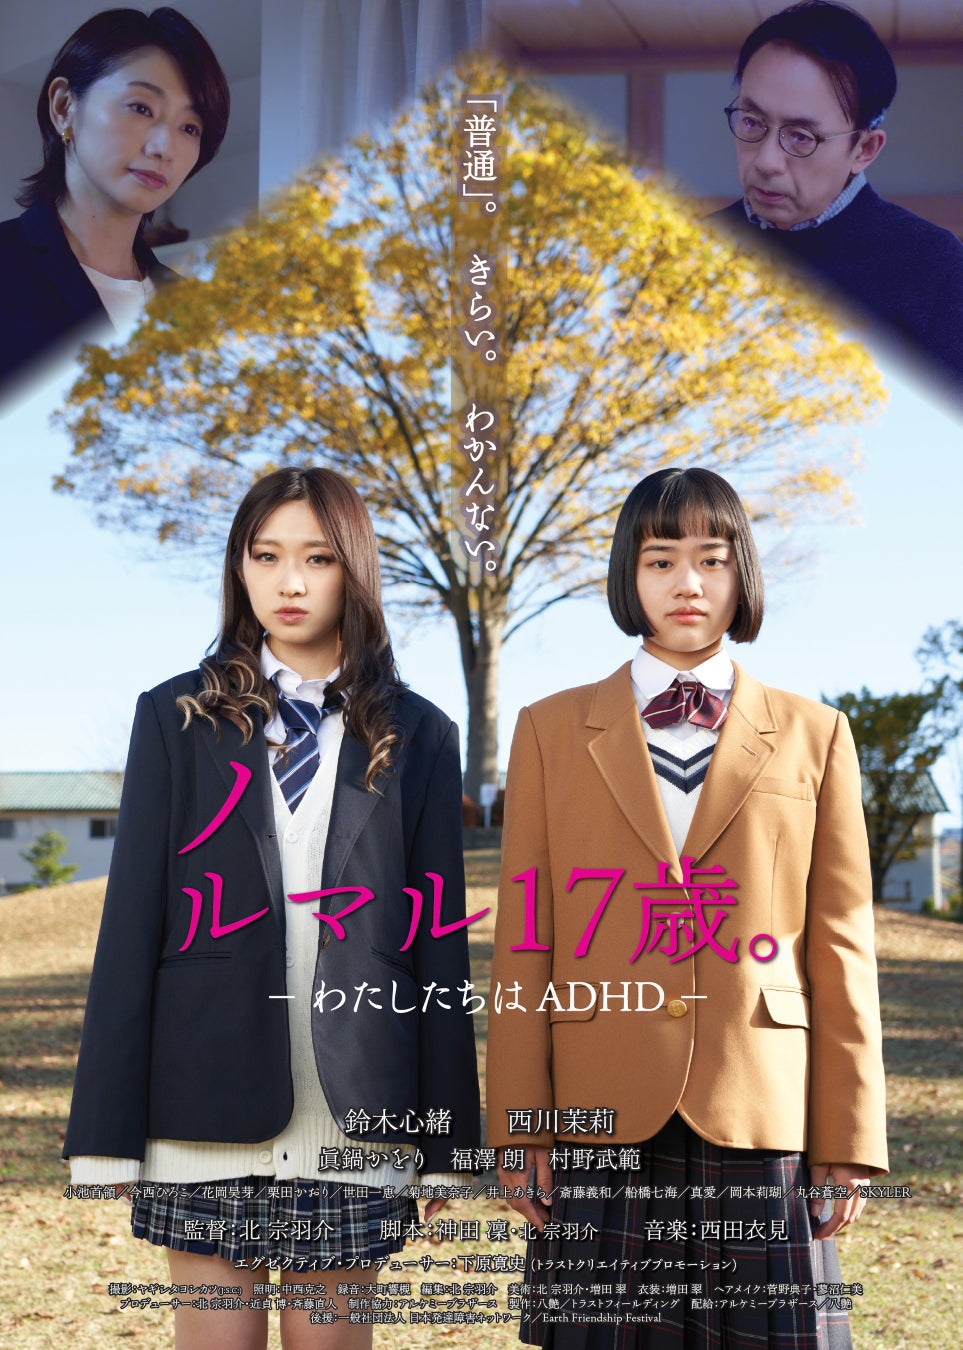 ADHD(注意欠如・多動症)の女子高生たちが生きる道を見つけて行く 映画『ノルマル17歳。― わたしたちはADHD ― 』 4月5日(金)東京・アップリンク吉祥寺にて公開